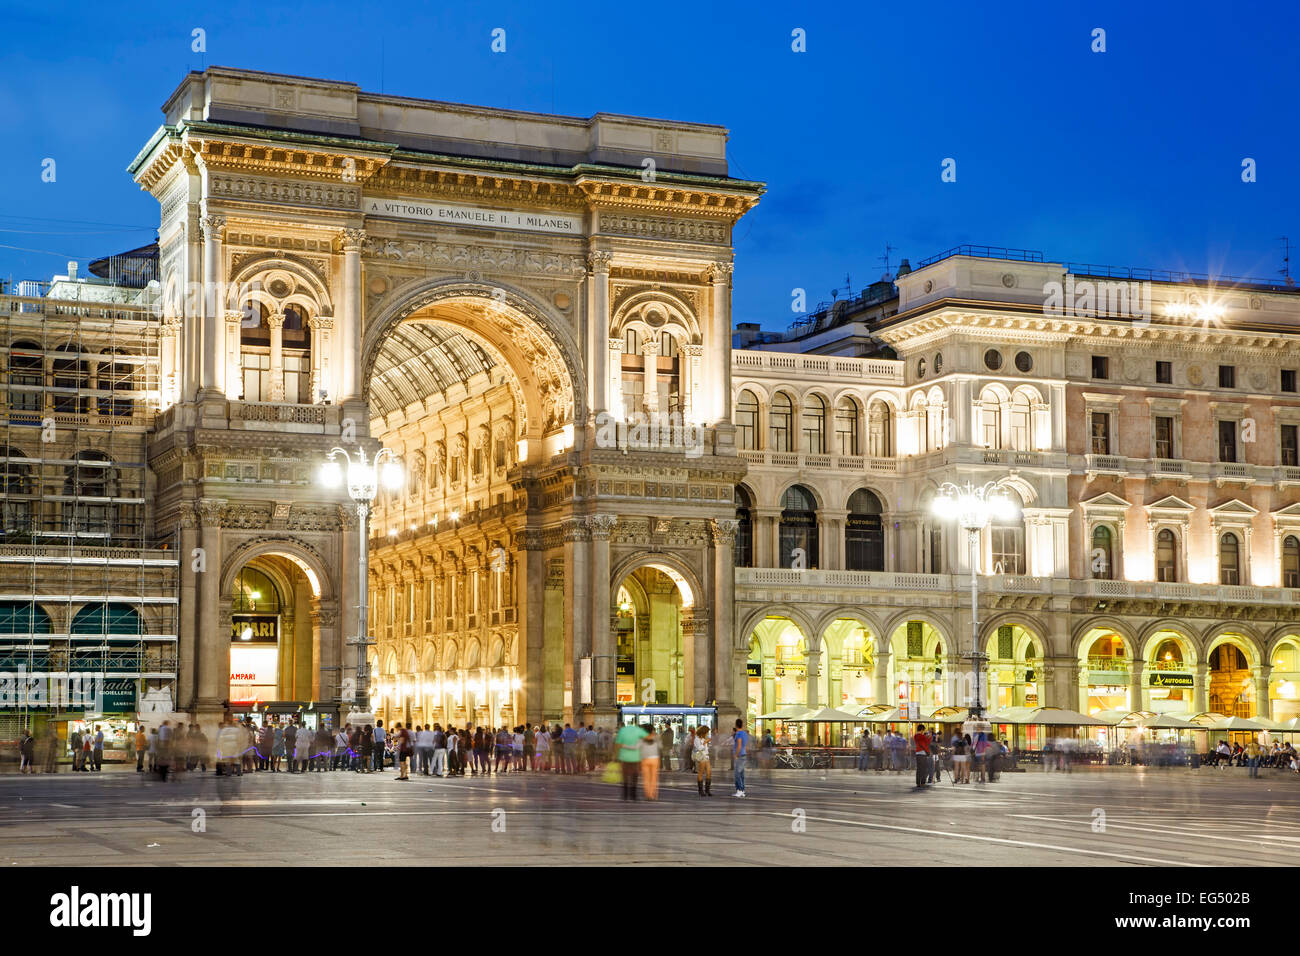 La Galleria Vittorio Emanuele et le peuple, place du Duomo, Milan, Italie Banque D'Images